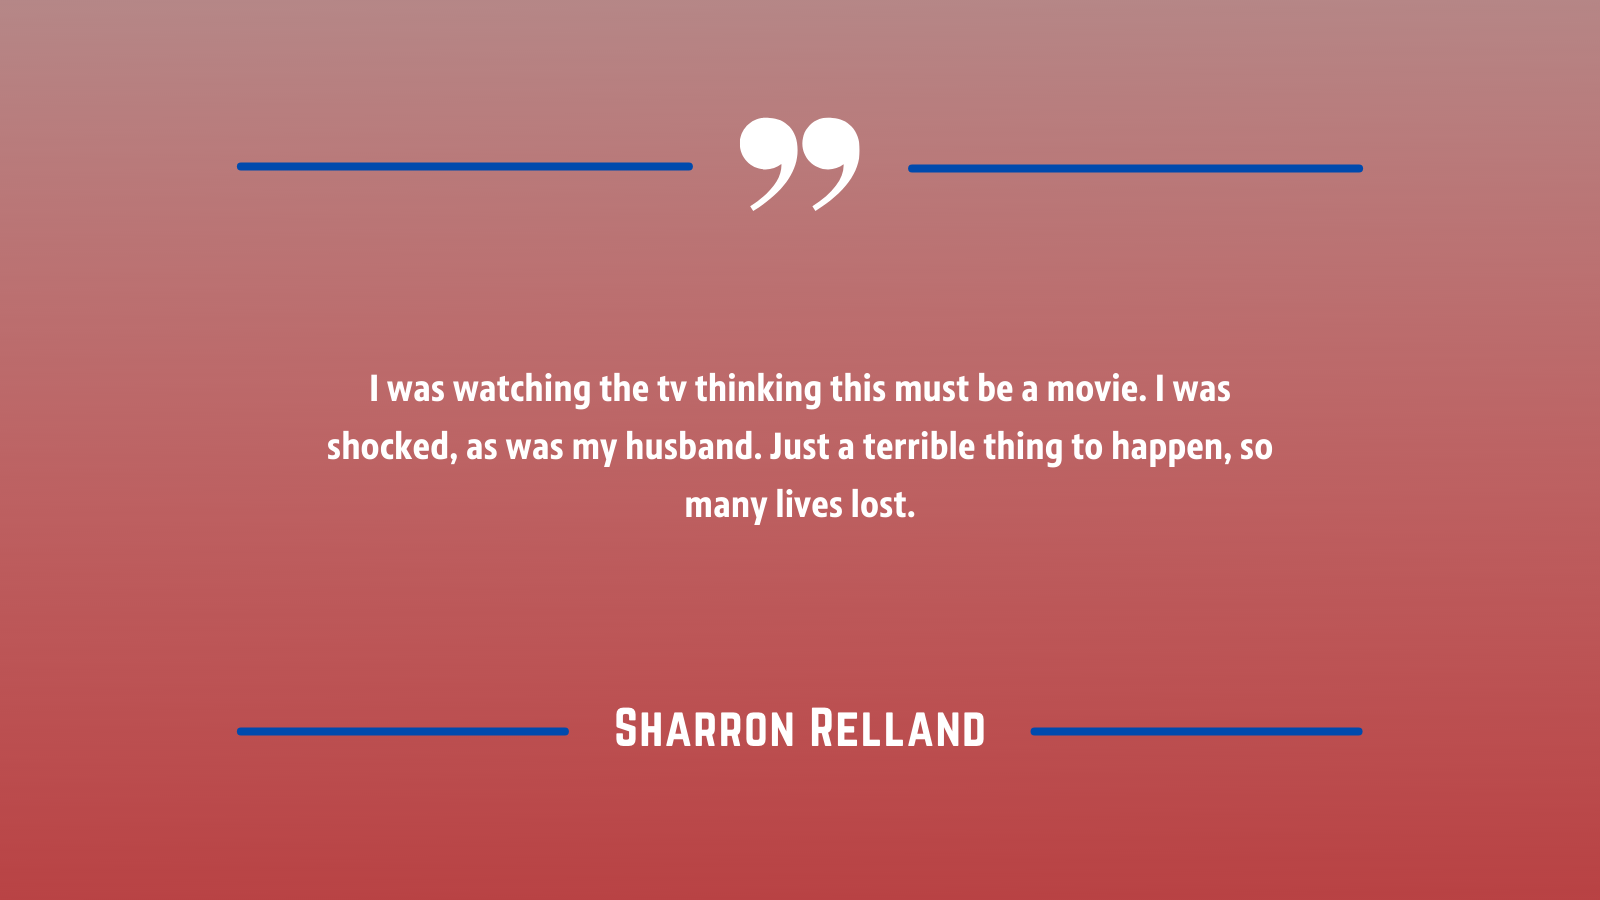 September 11 - Sharron Relland